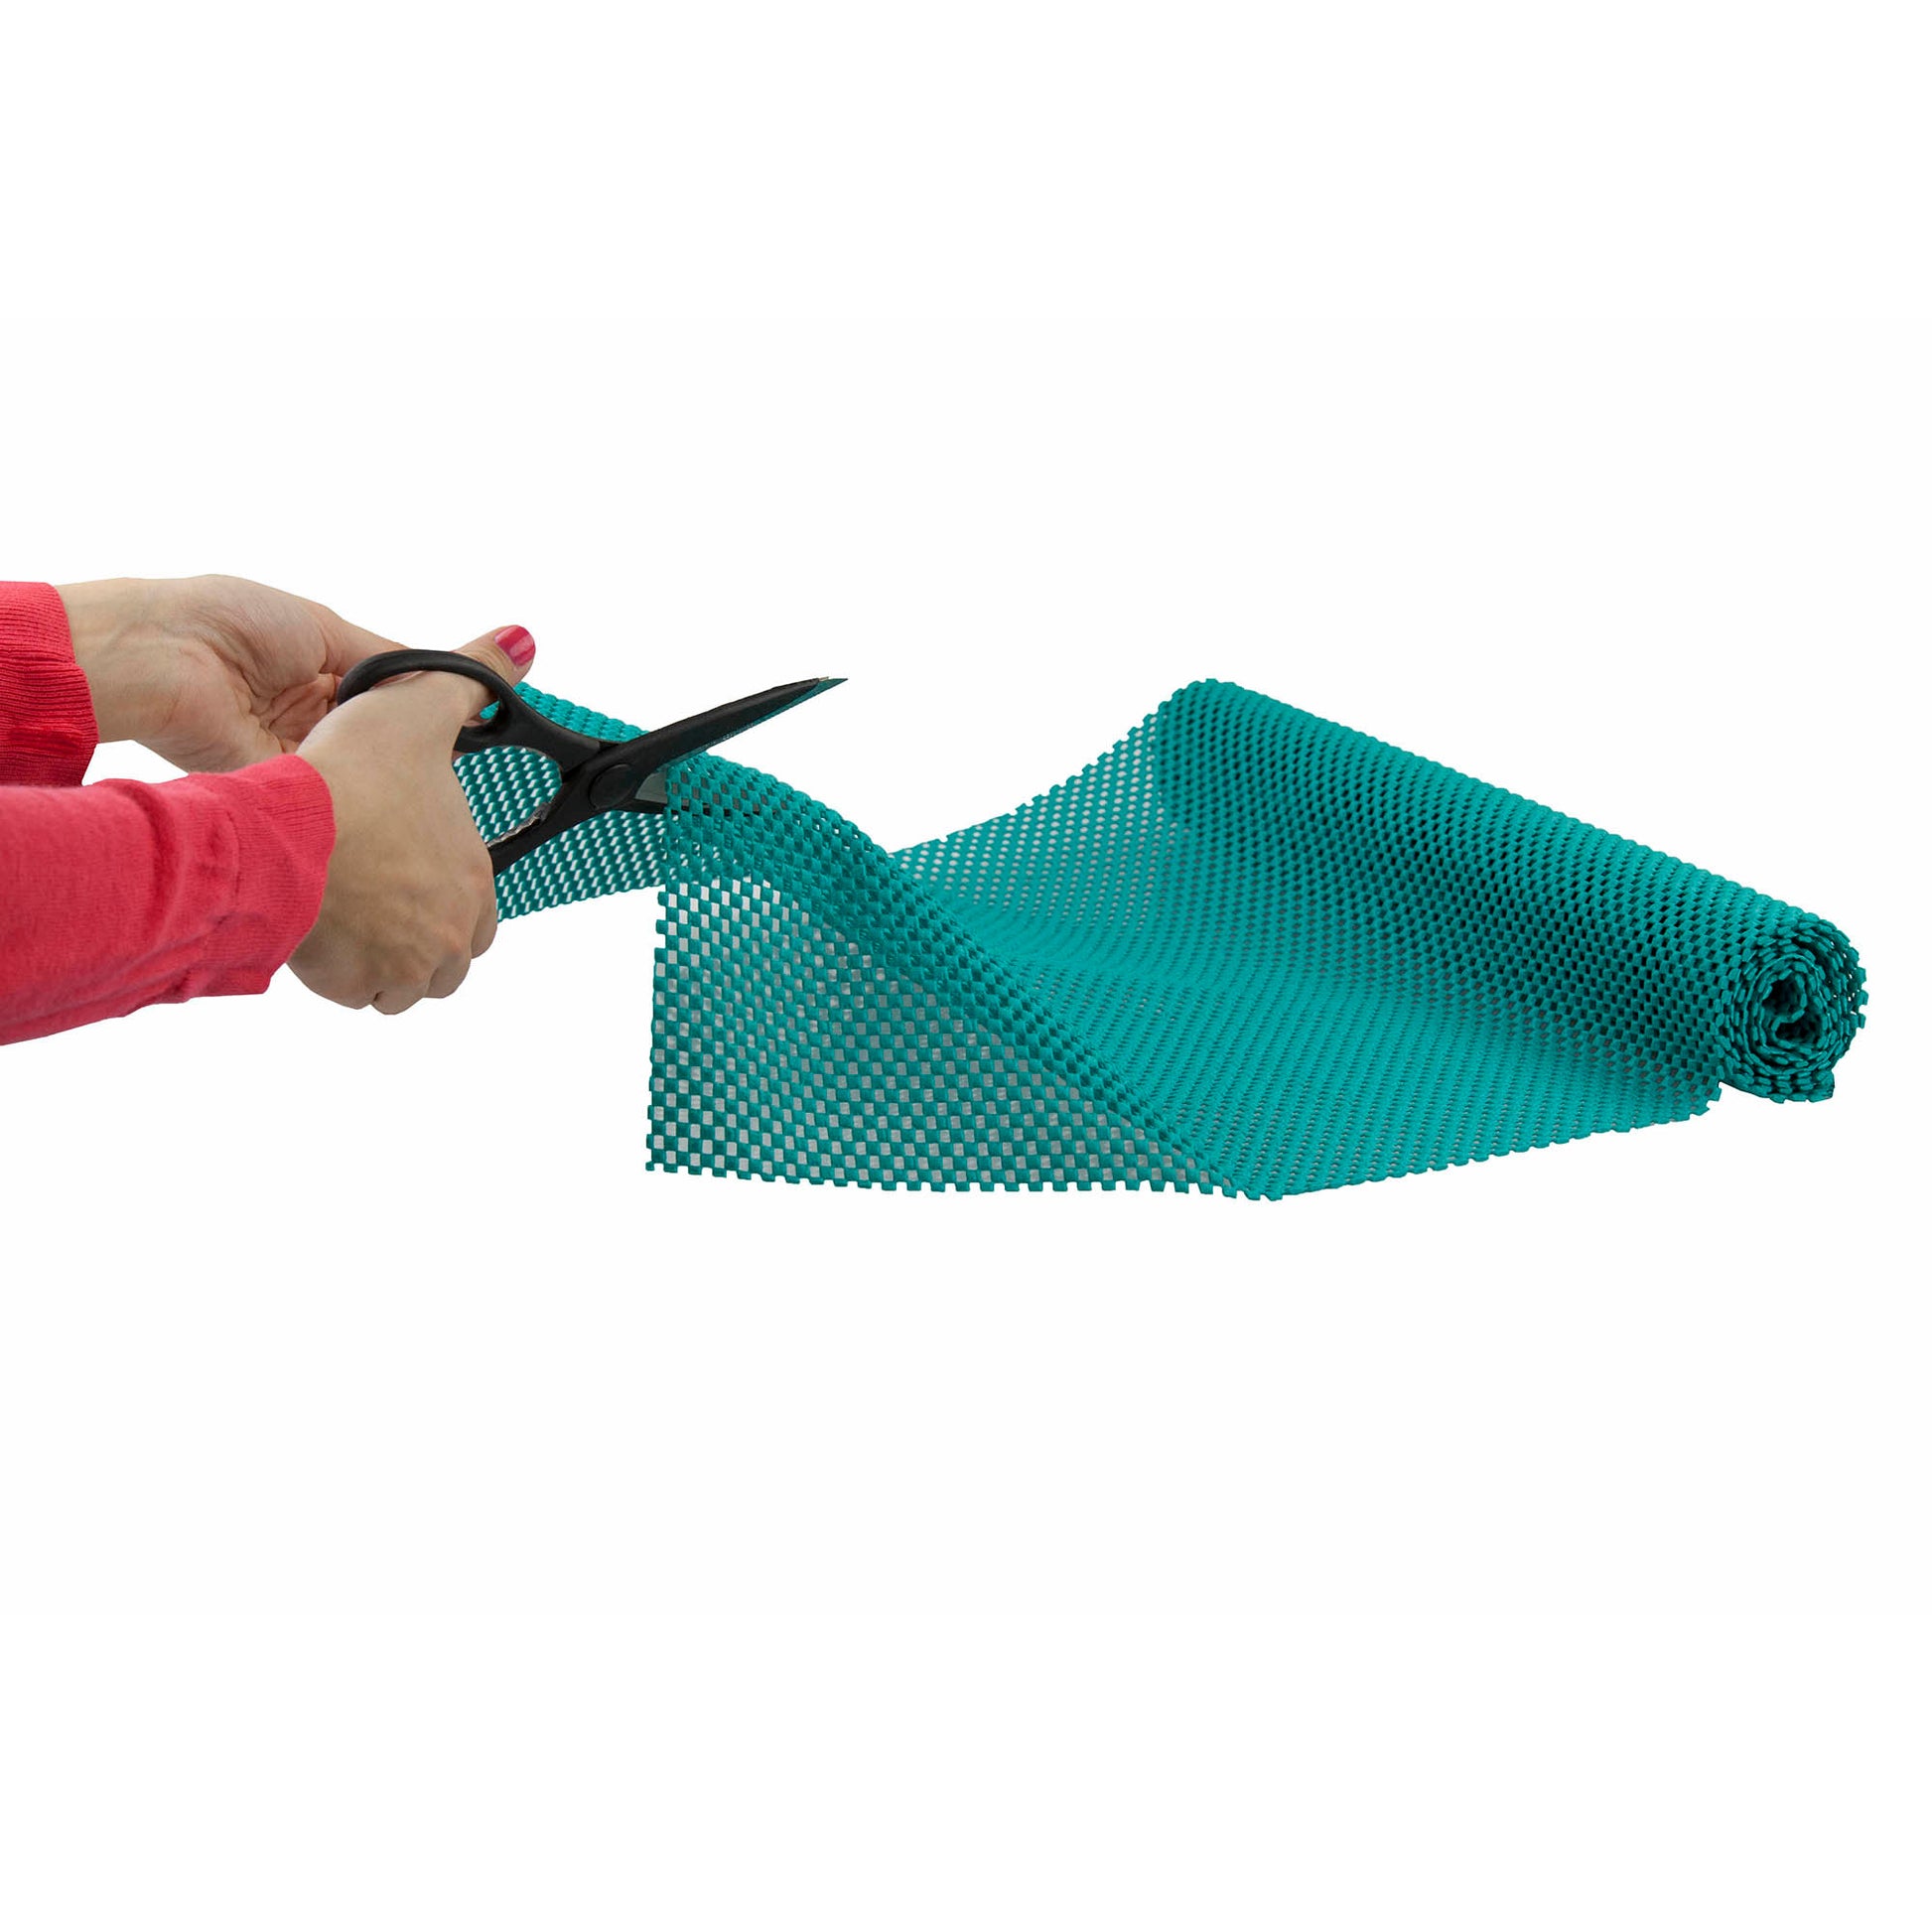 Home Basics Non-Adhesive Rubber Shelf Grip Liner